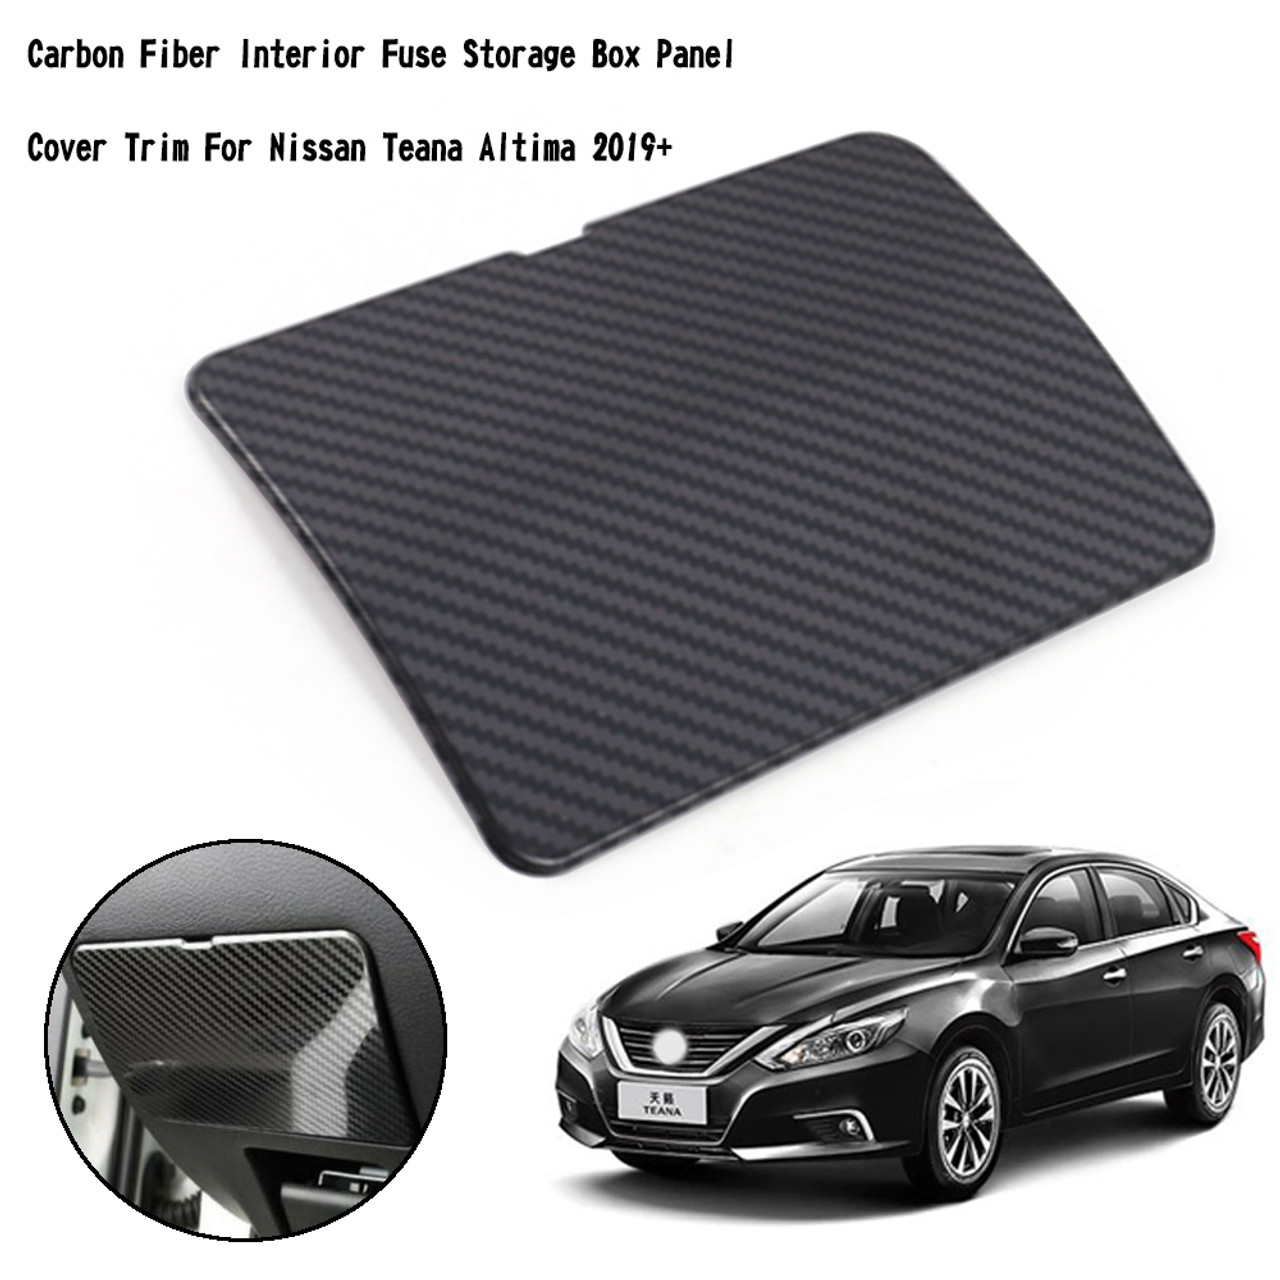 Carbon Fiber Interior Fuse Storage Box Panel Cover Trim Fit for Nissan Teana Altima 2019+